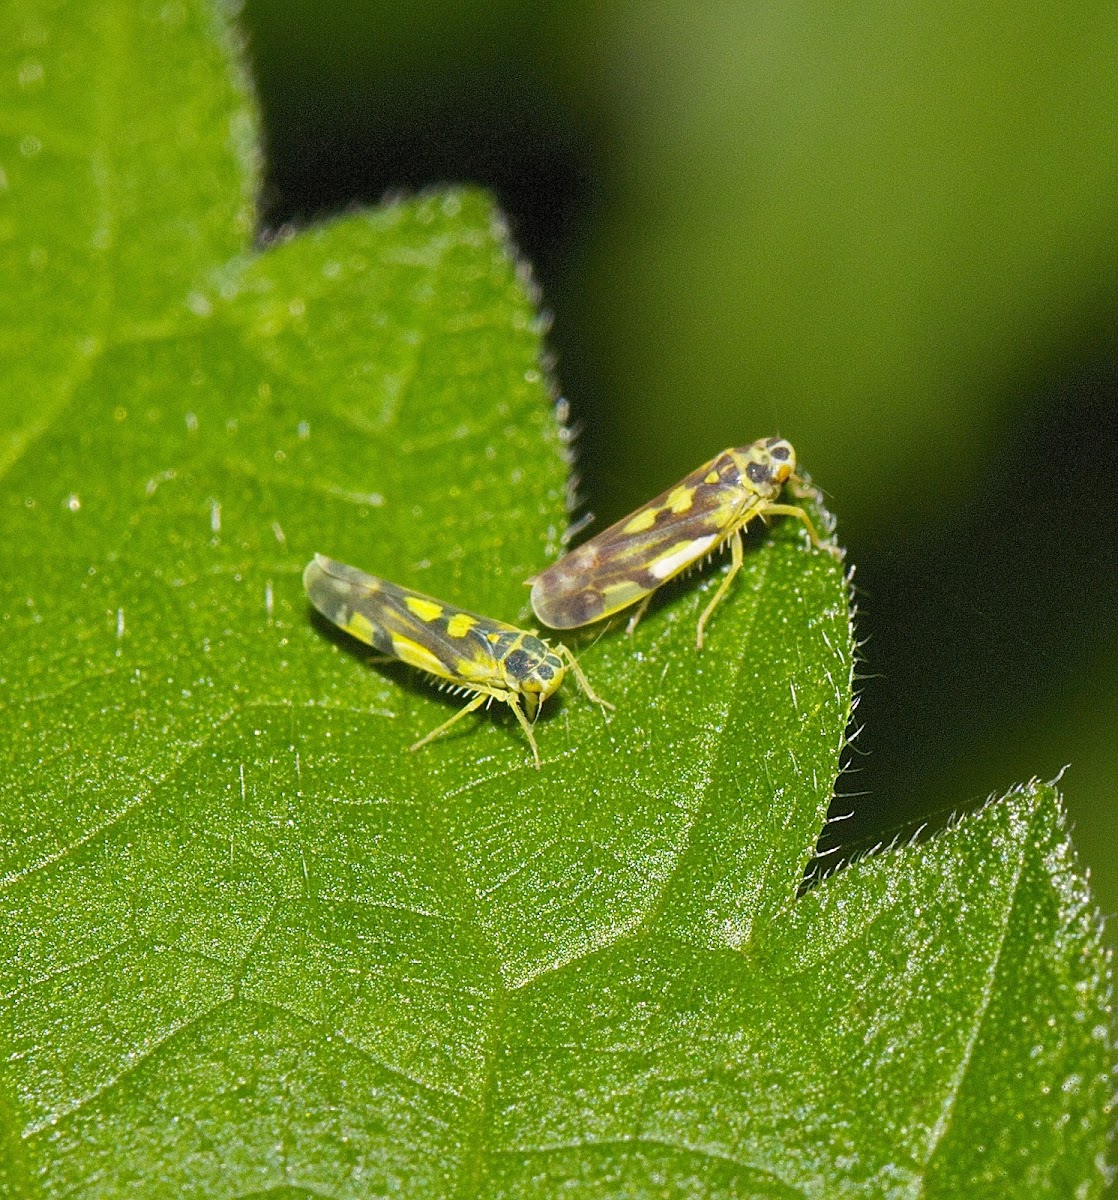 Potato Leafhopper